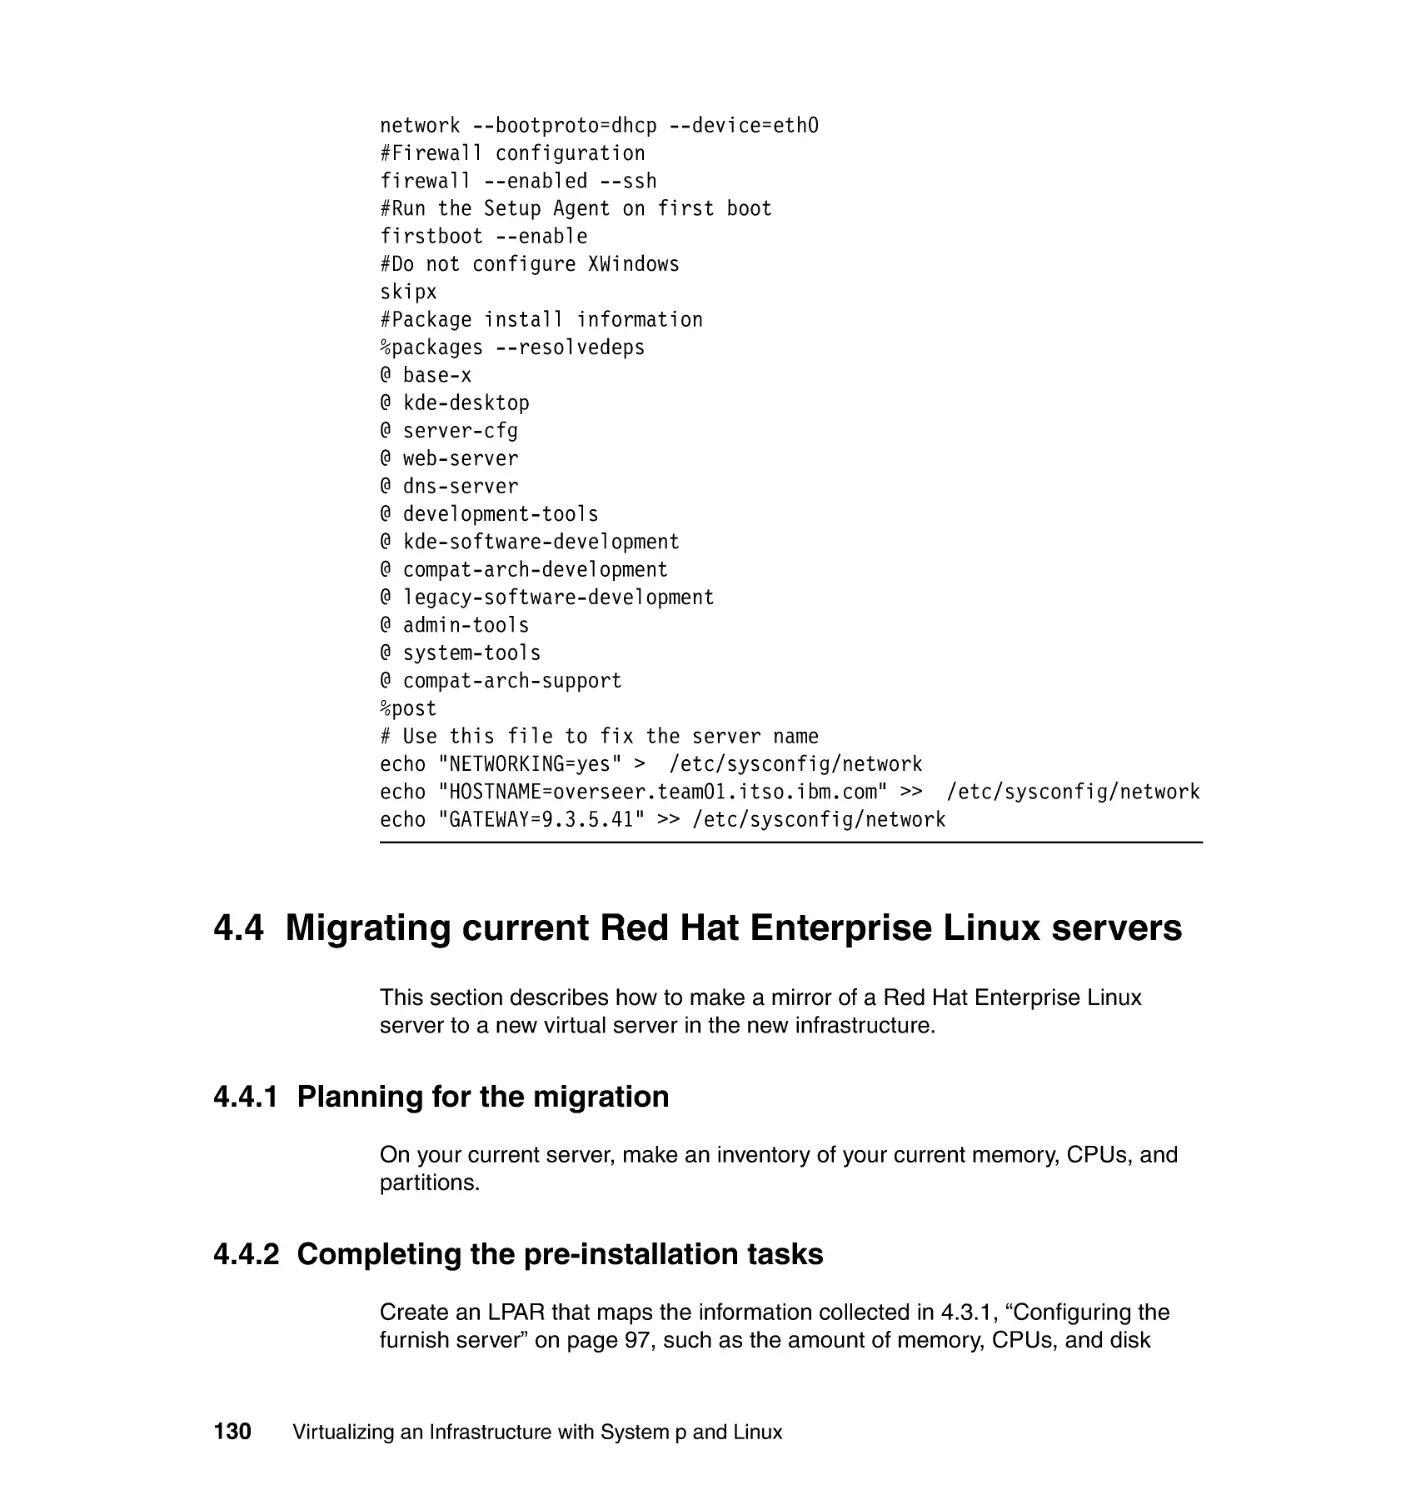 4.4 Migrating current Red Hat Enterprise Linux servers
4.4.1 Planning for the migration
4.4.2 Completing the pre-installation tasks